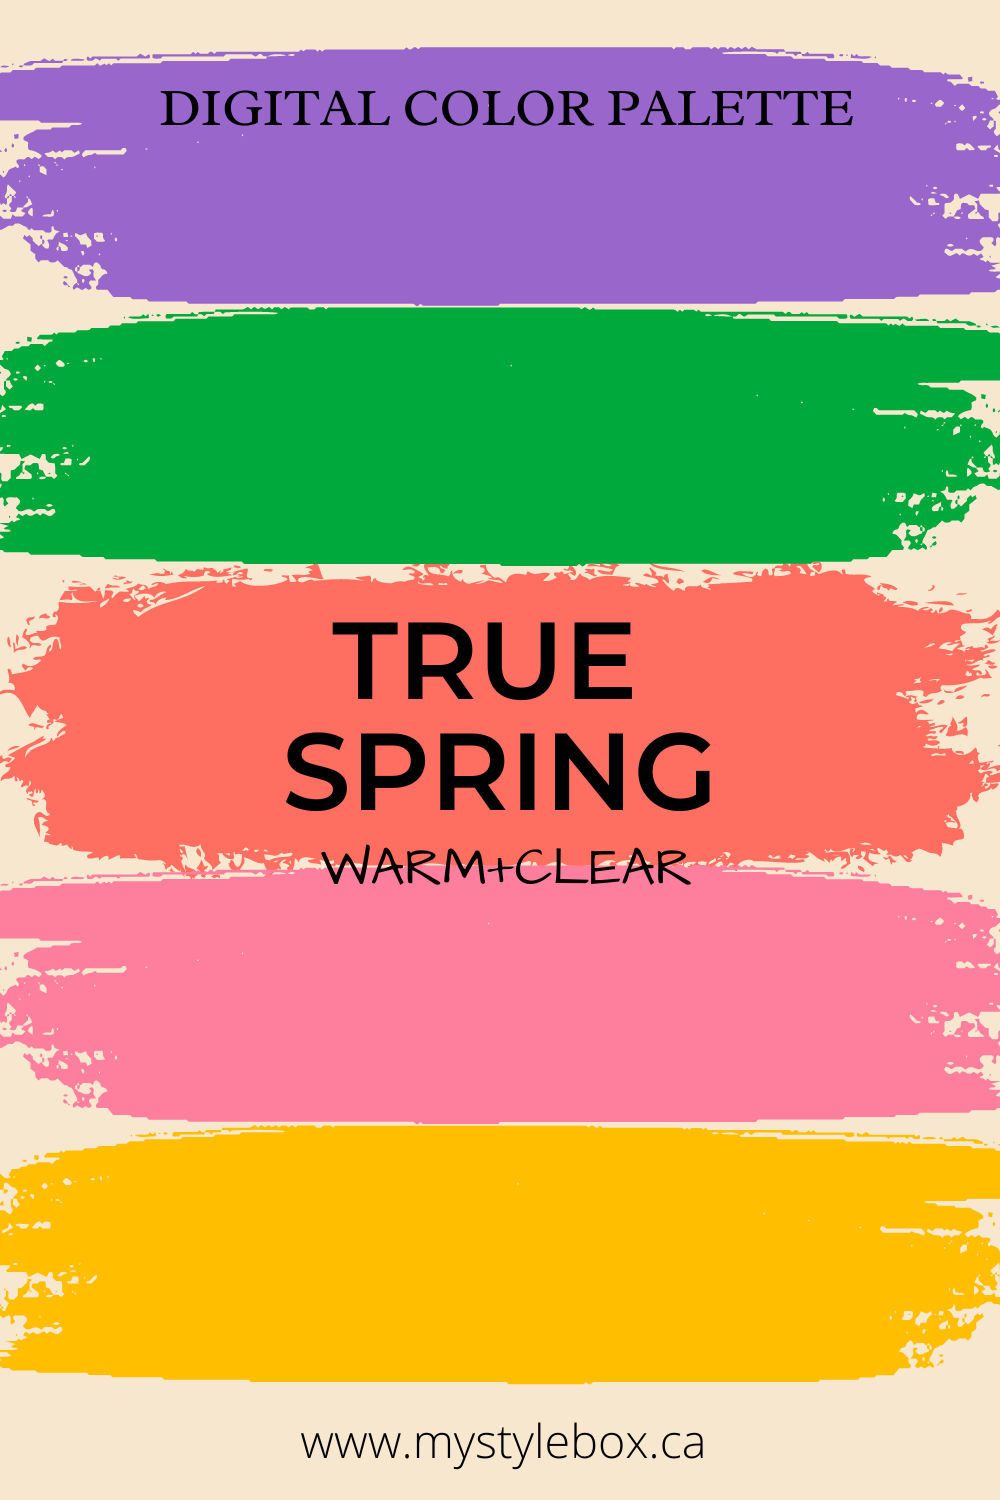 Paleta de colores verdaderos (cálidos) de la temporada de primavera